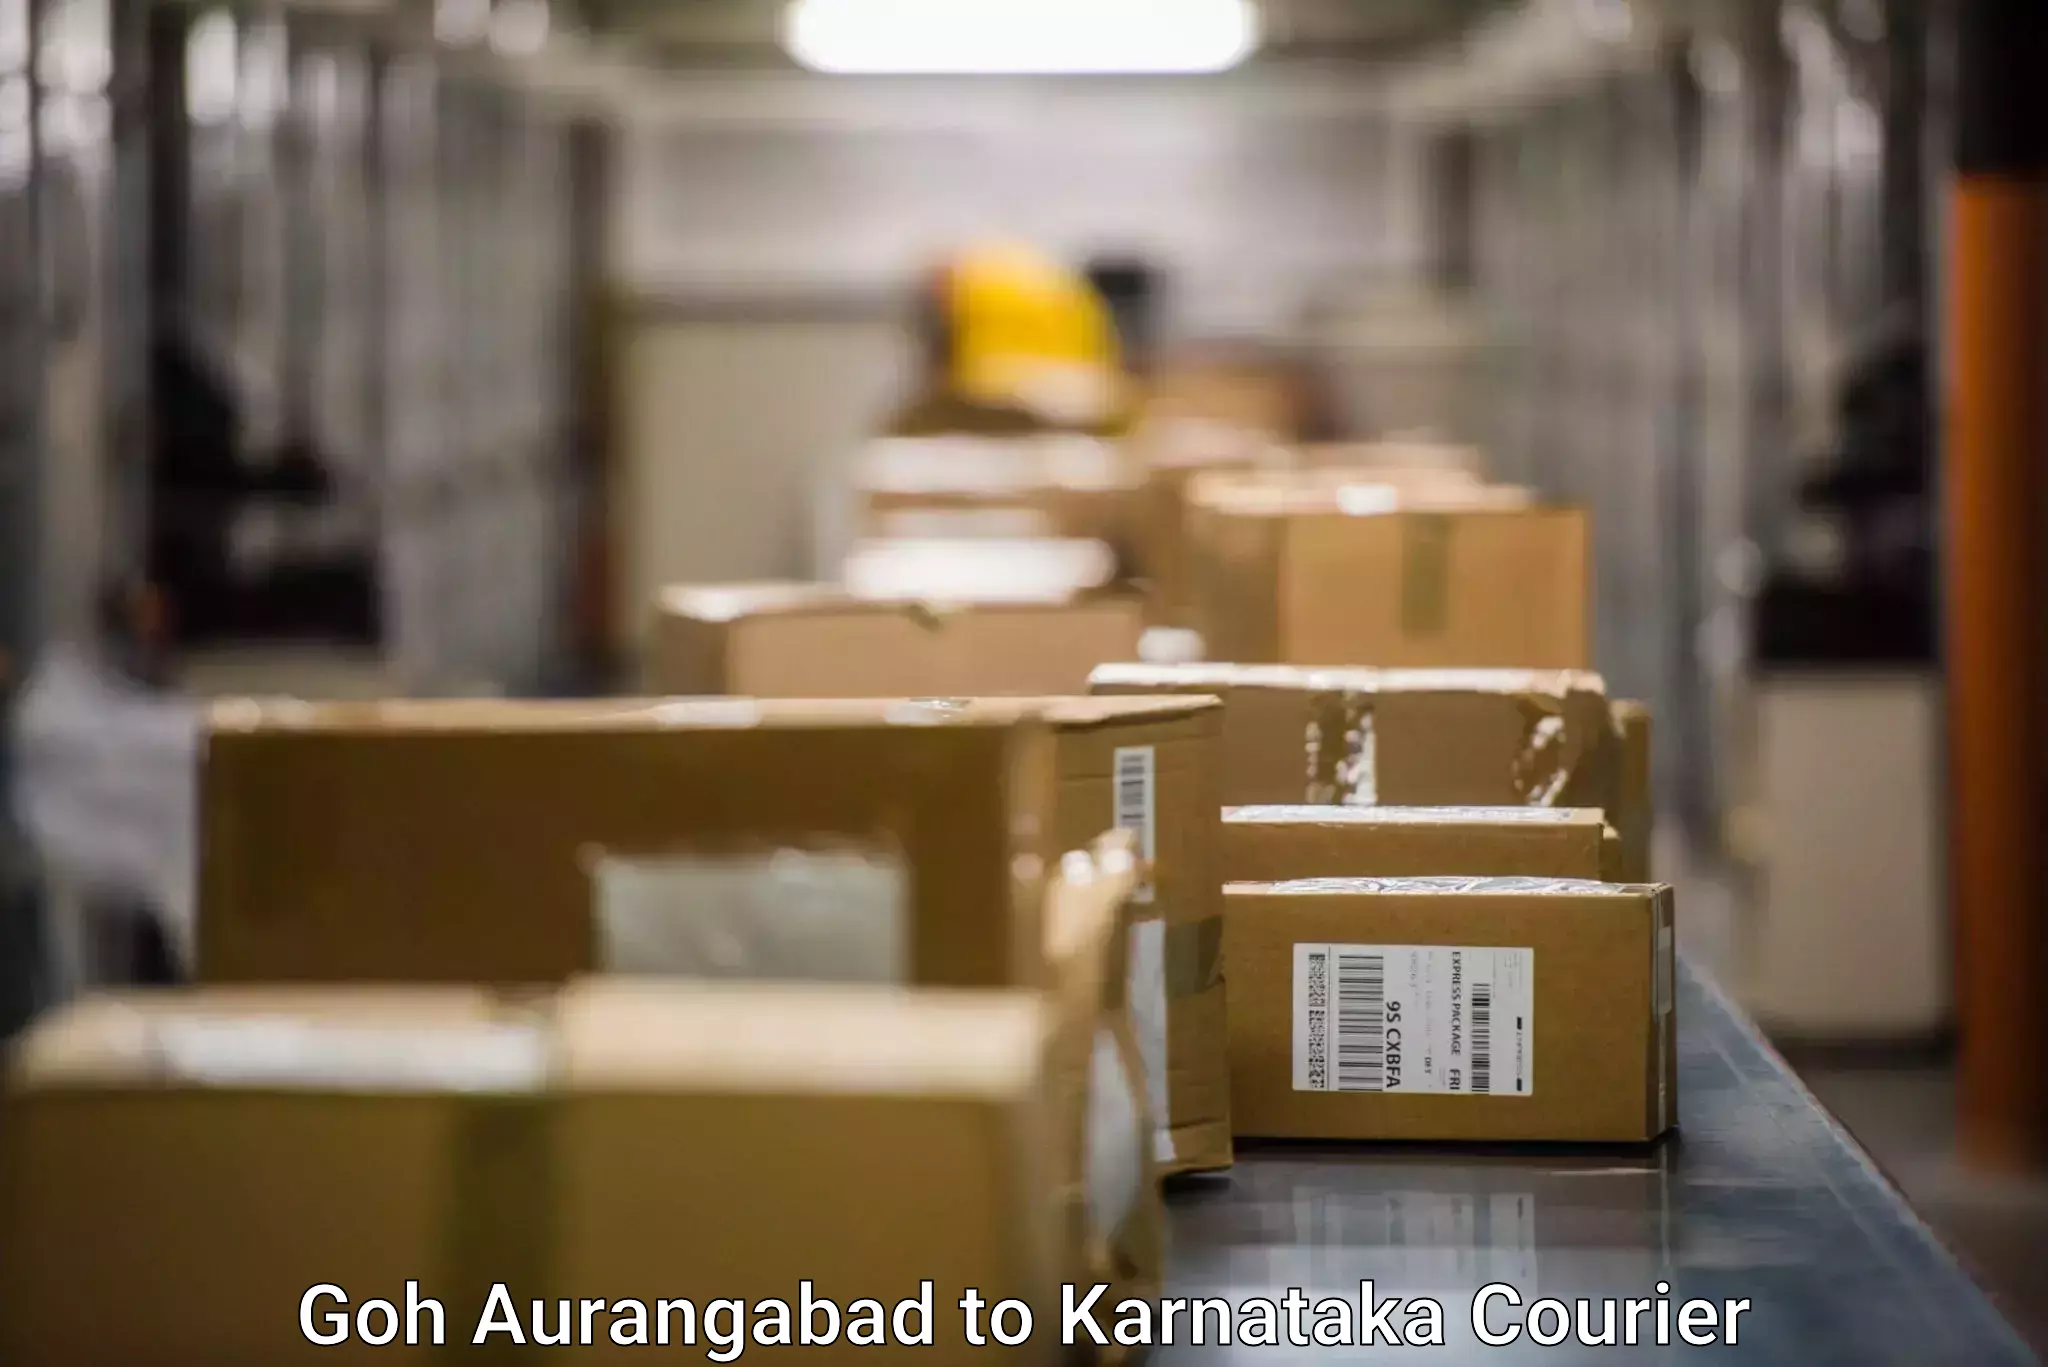 International parcel service Goh Aurangabad to Karnataka